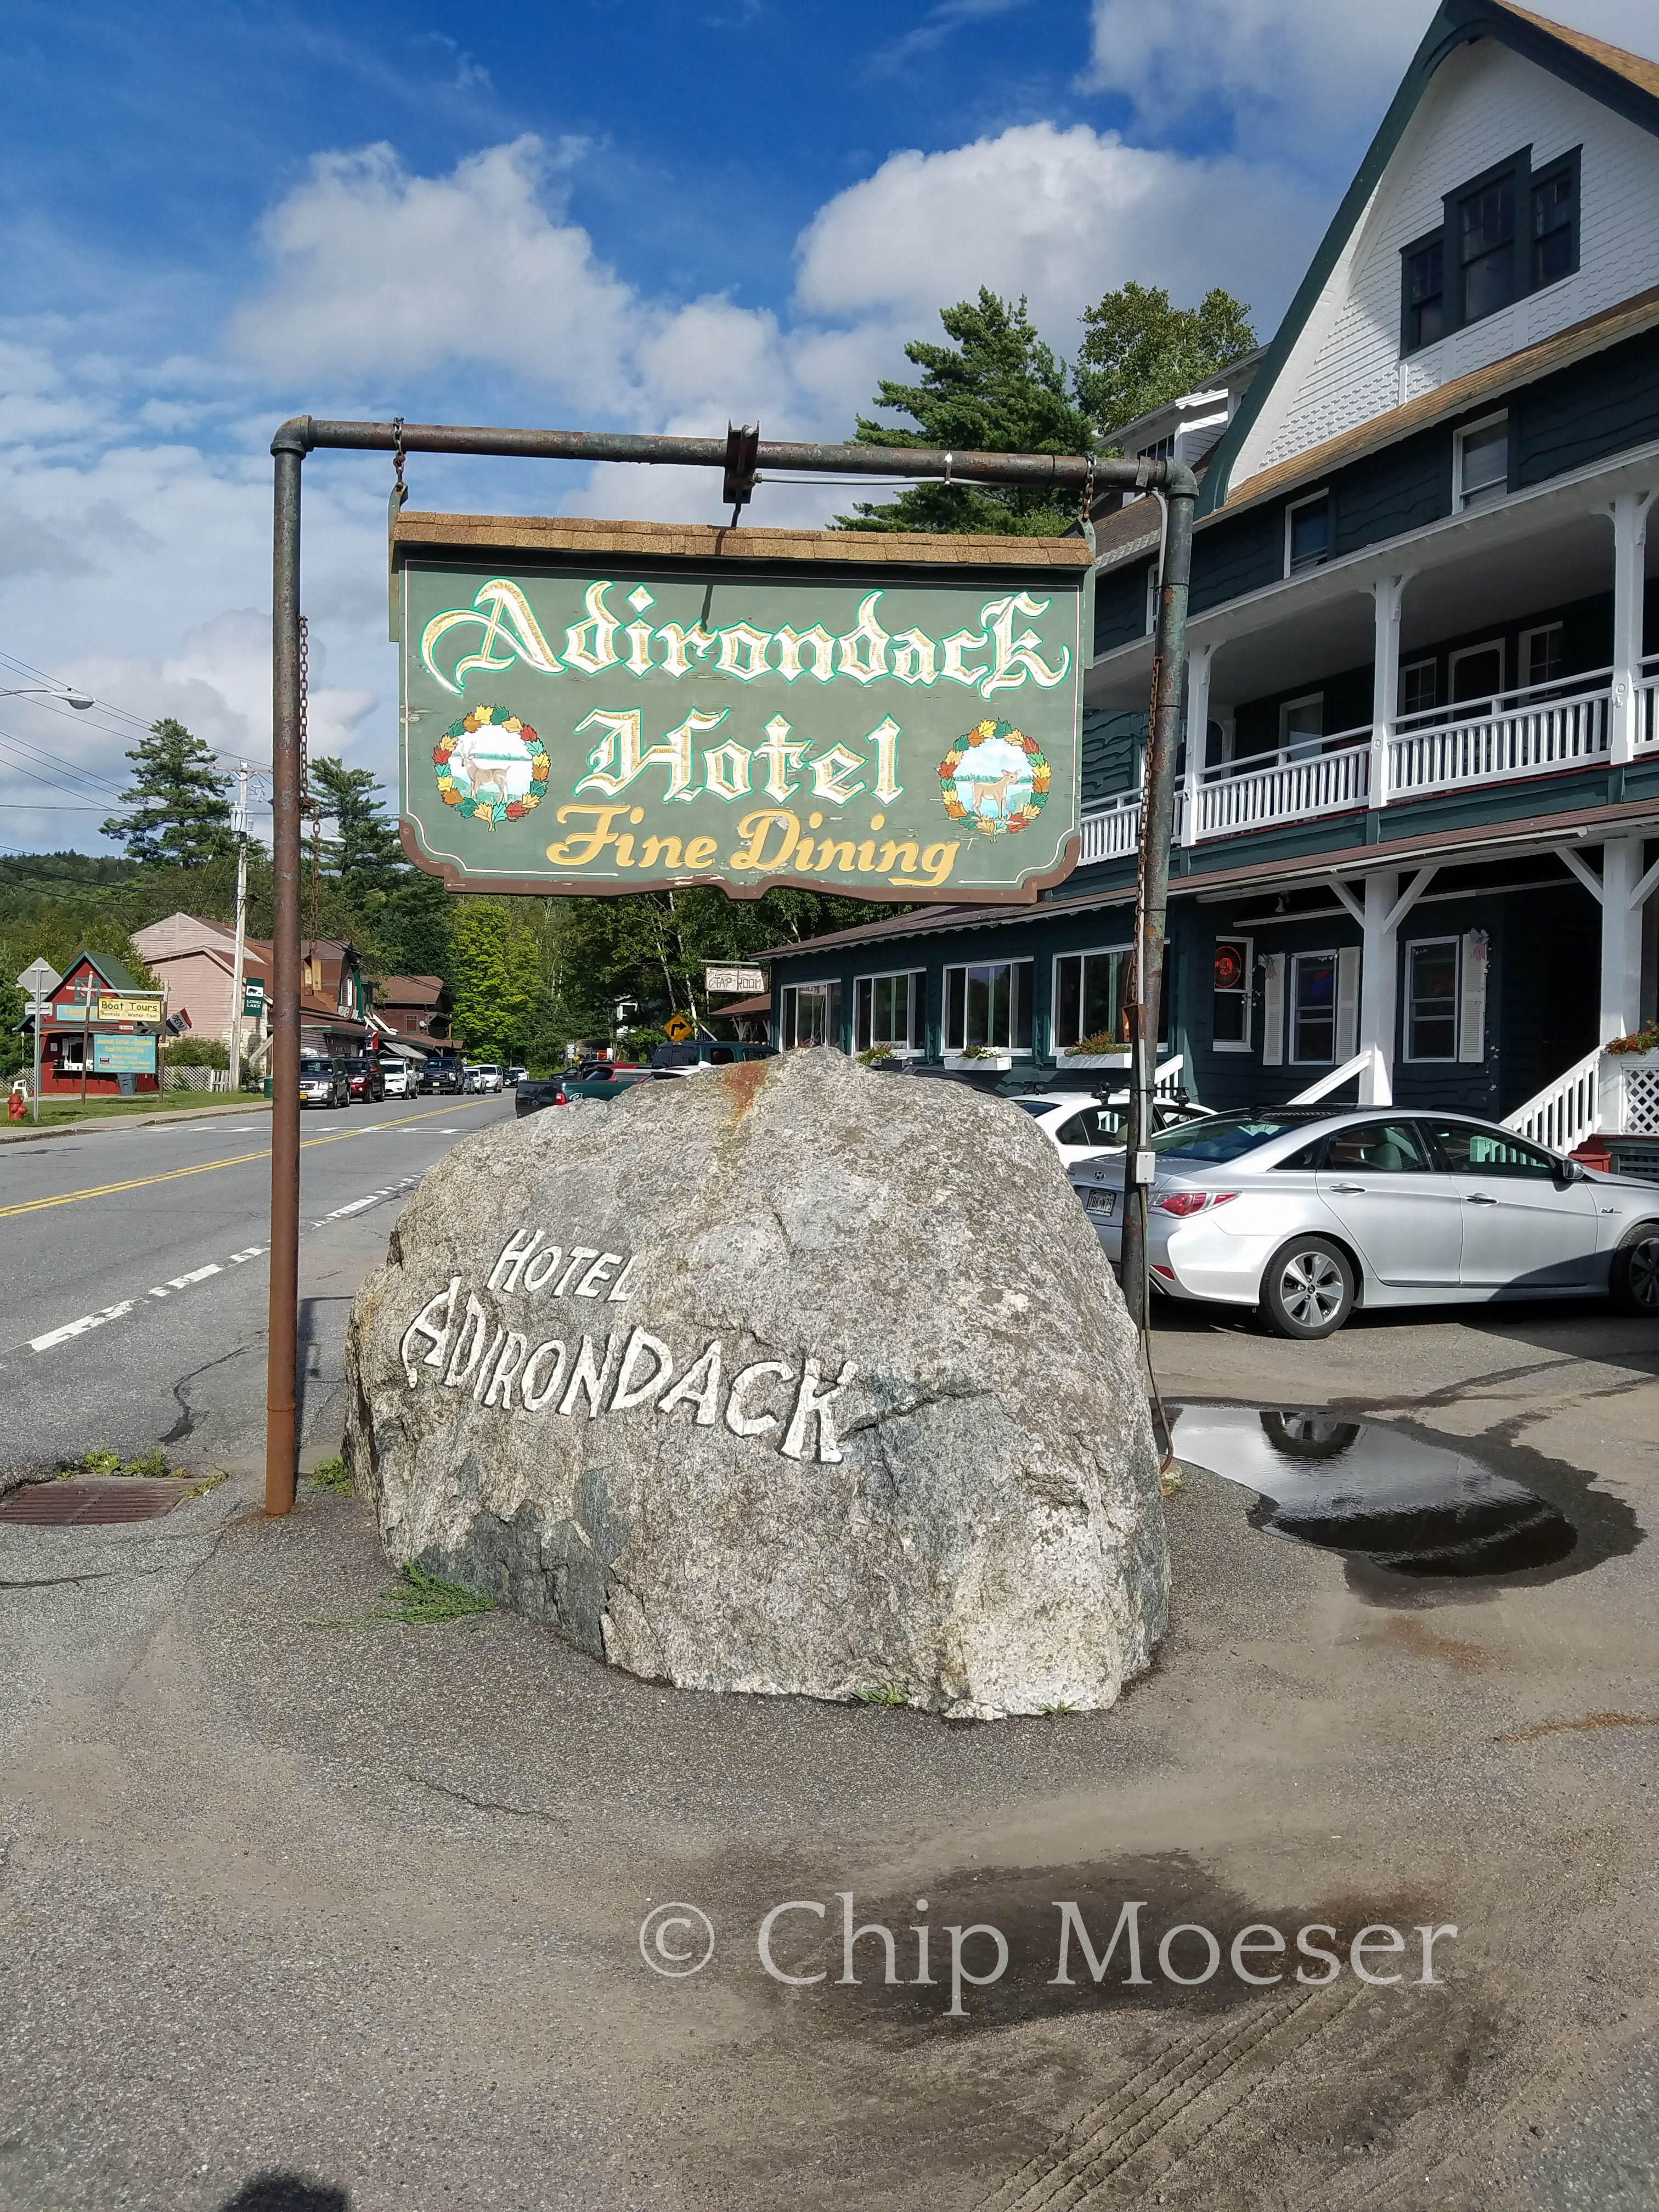 Adirondack Hotel